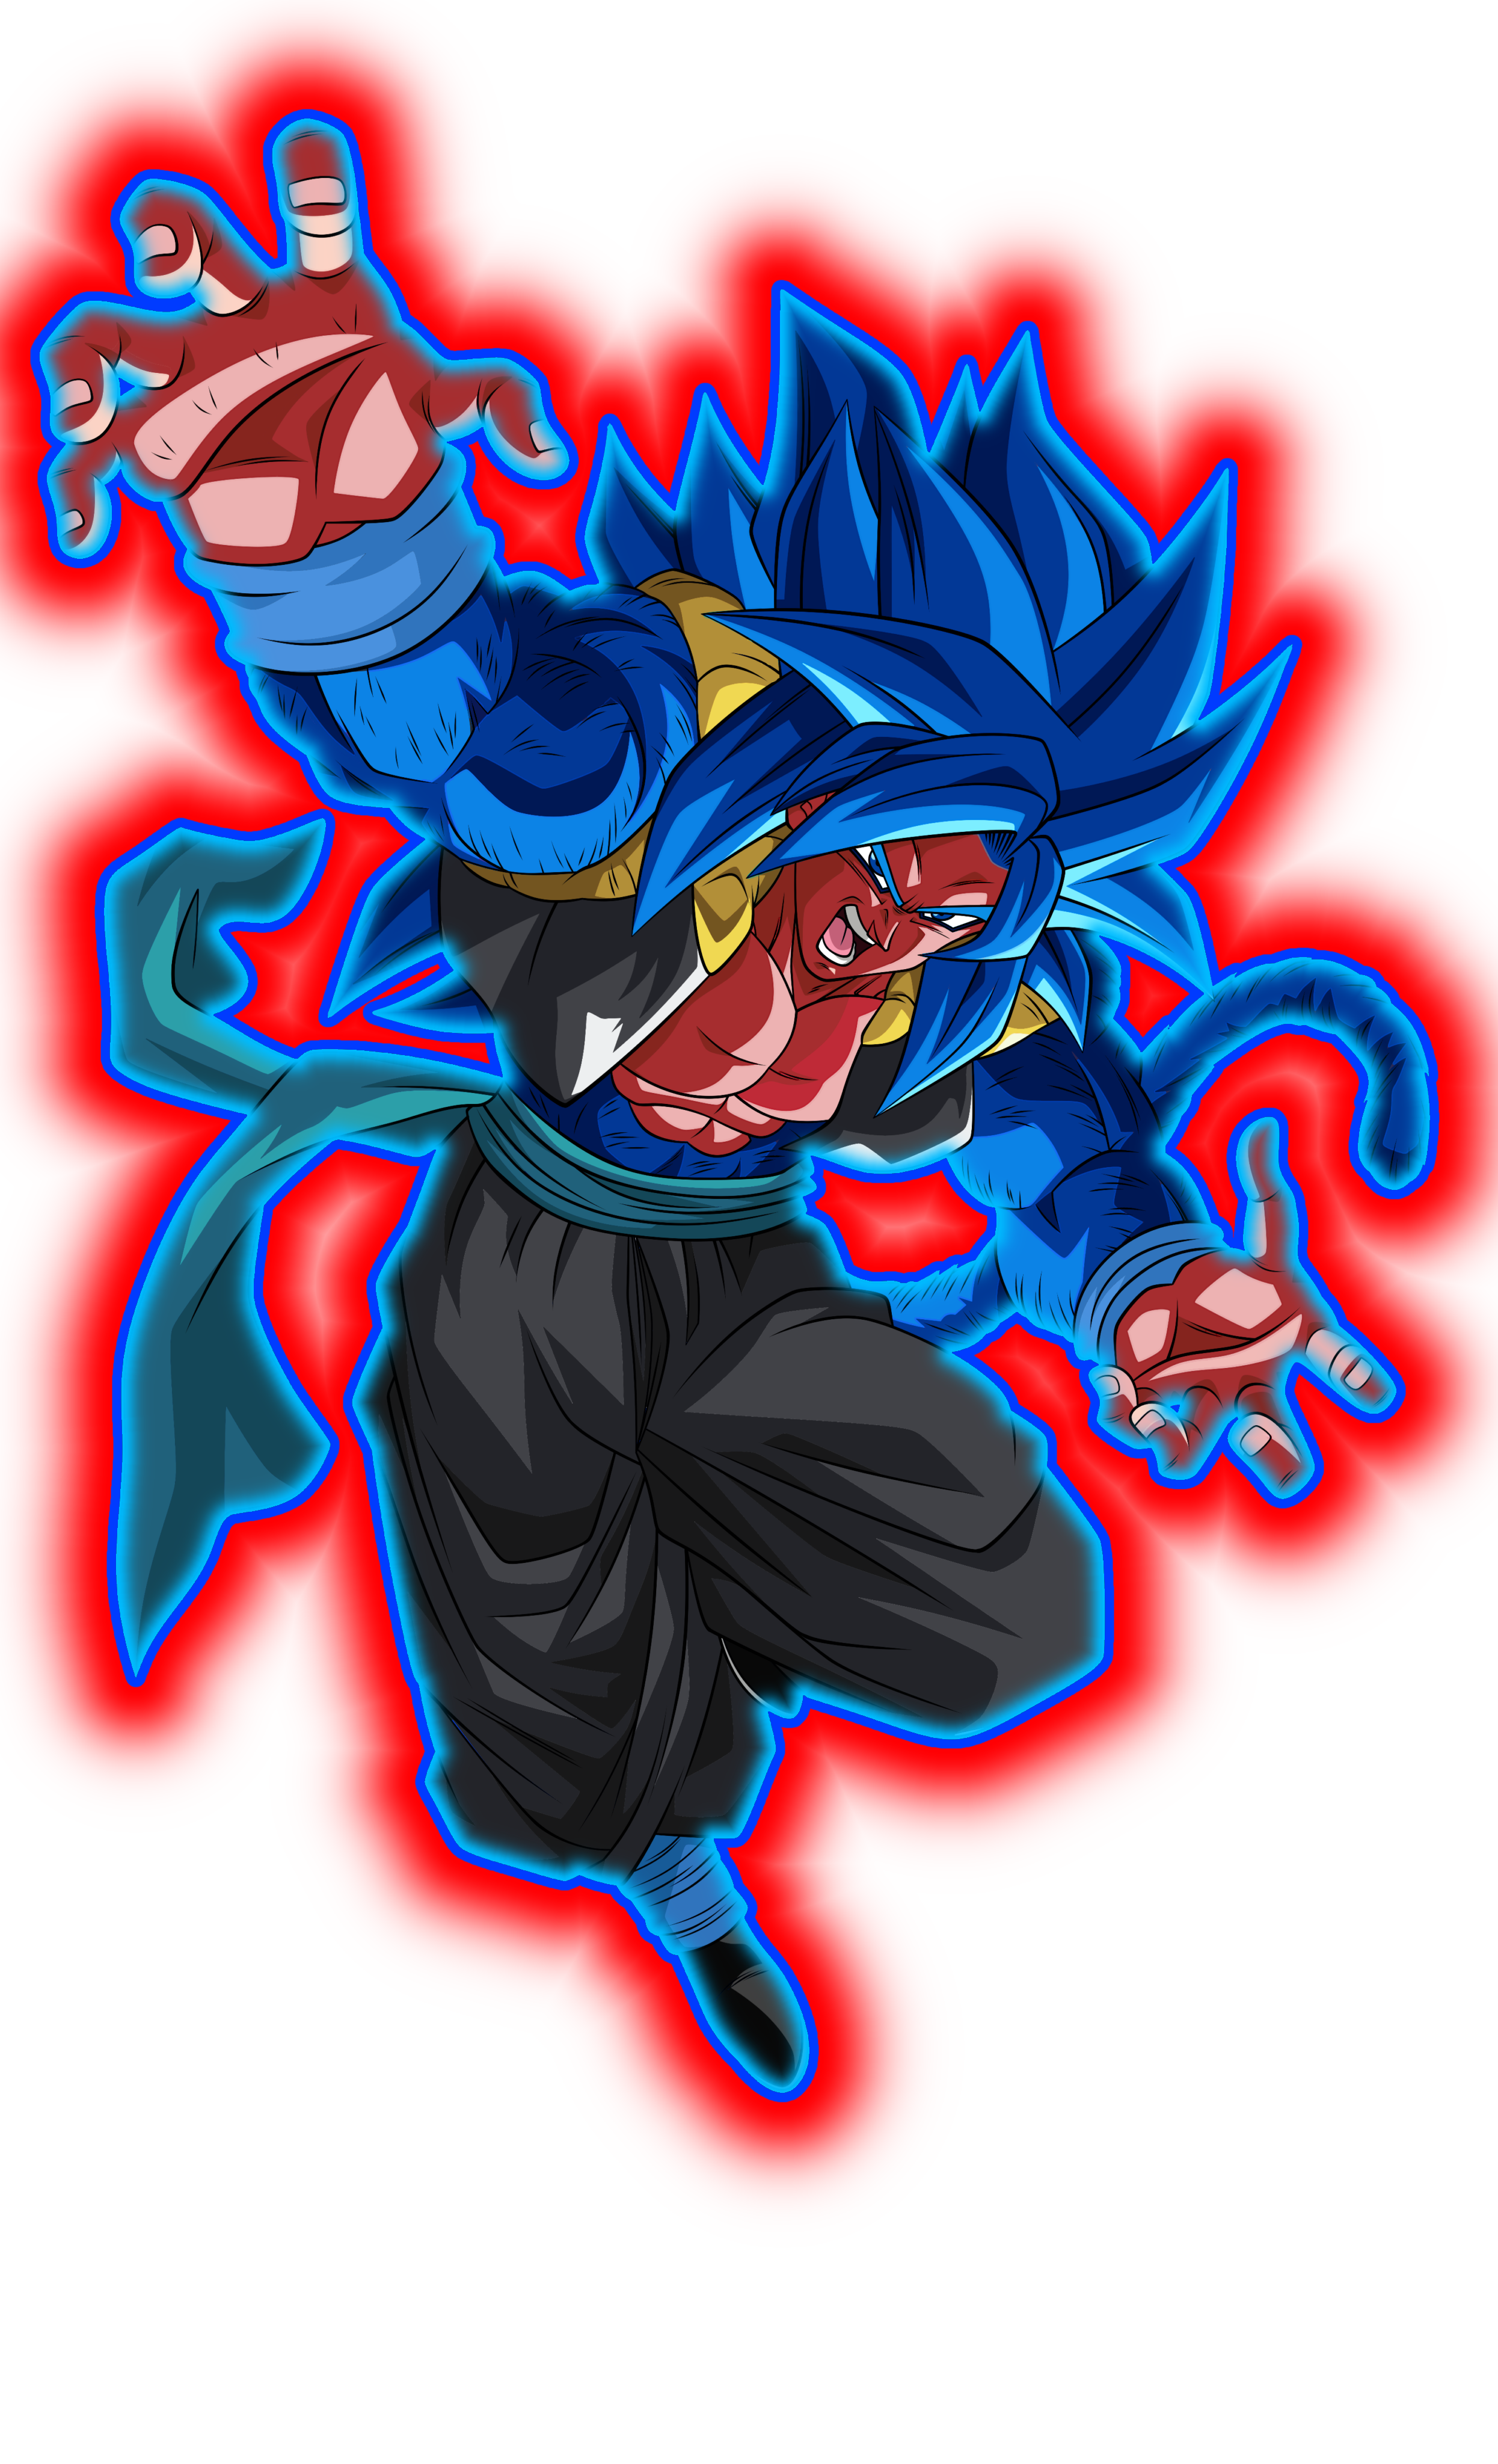 Goku (DBS) ssj blue kaioken x20 by xchs on DeviantArt